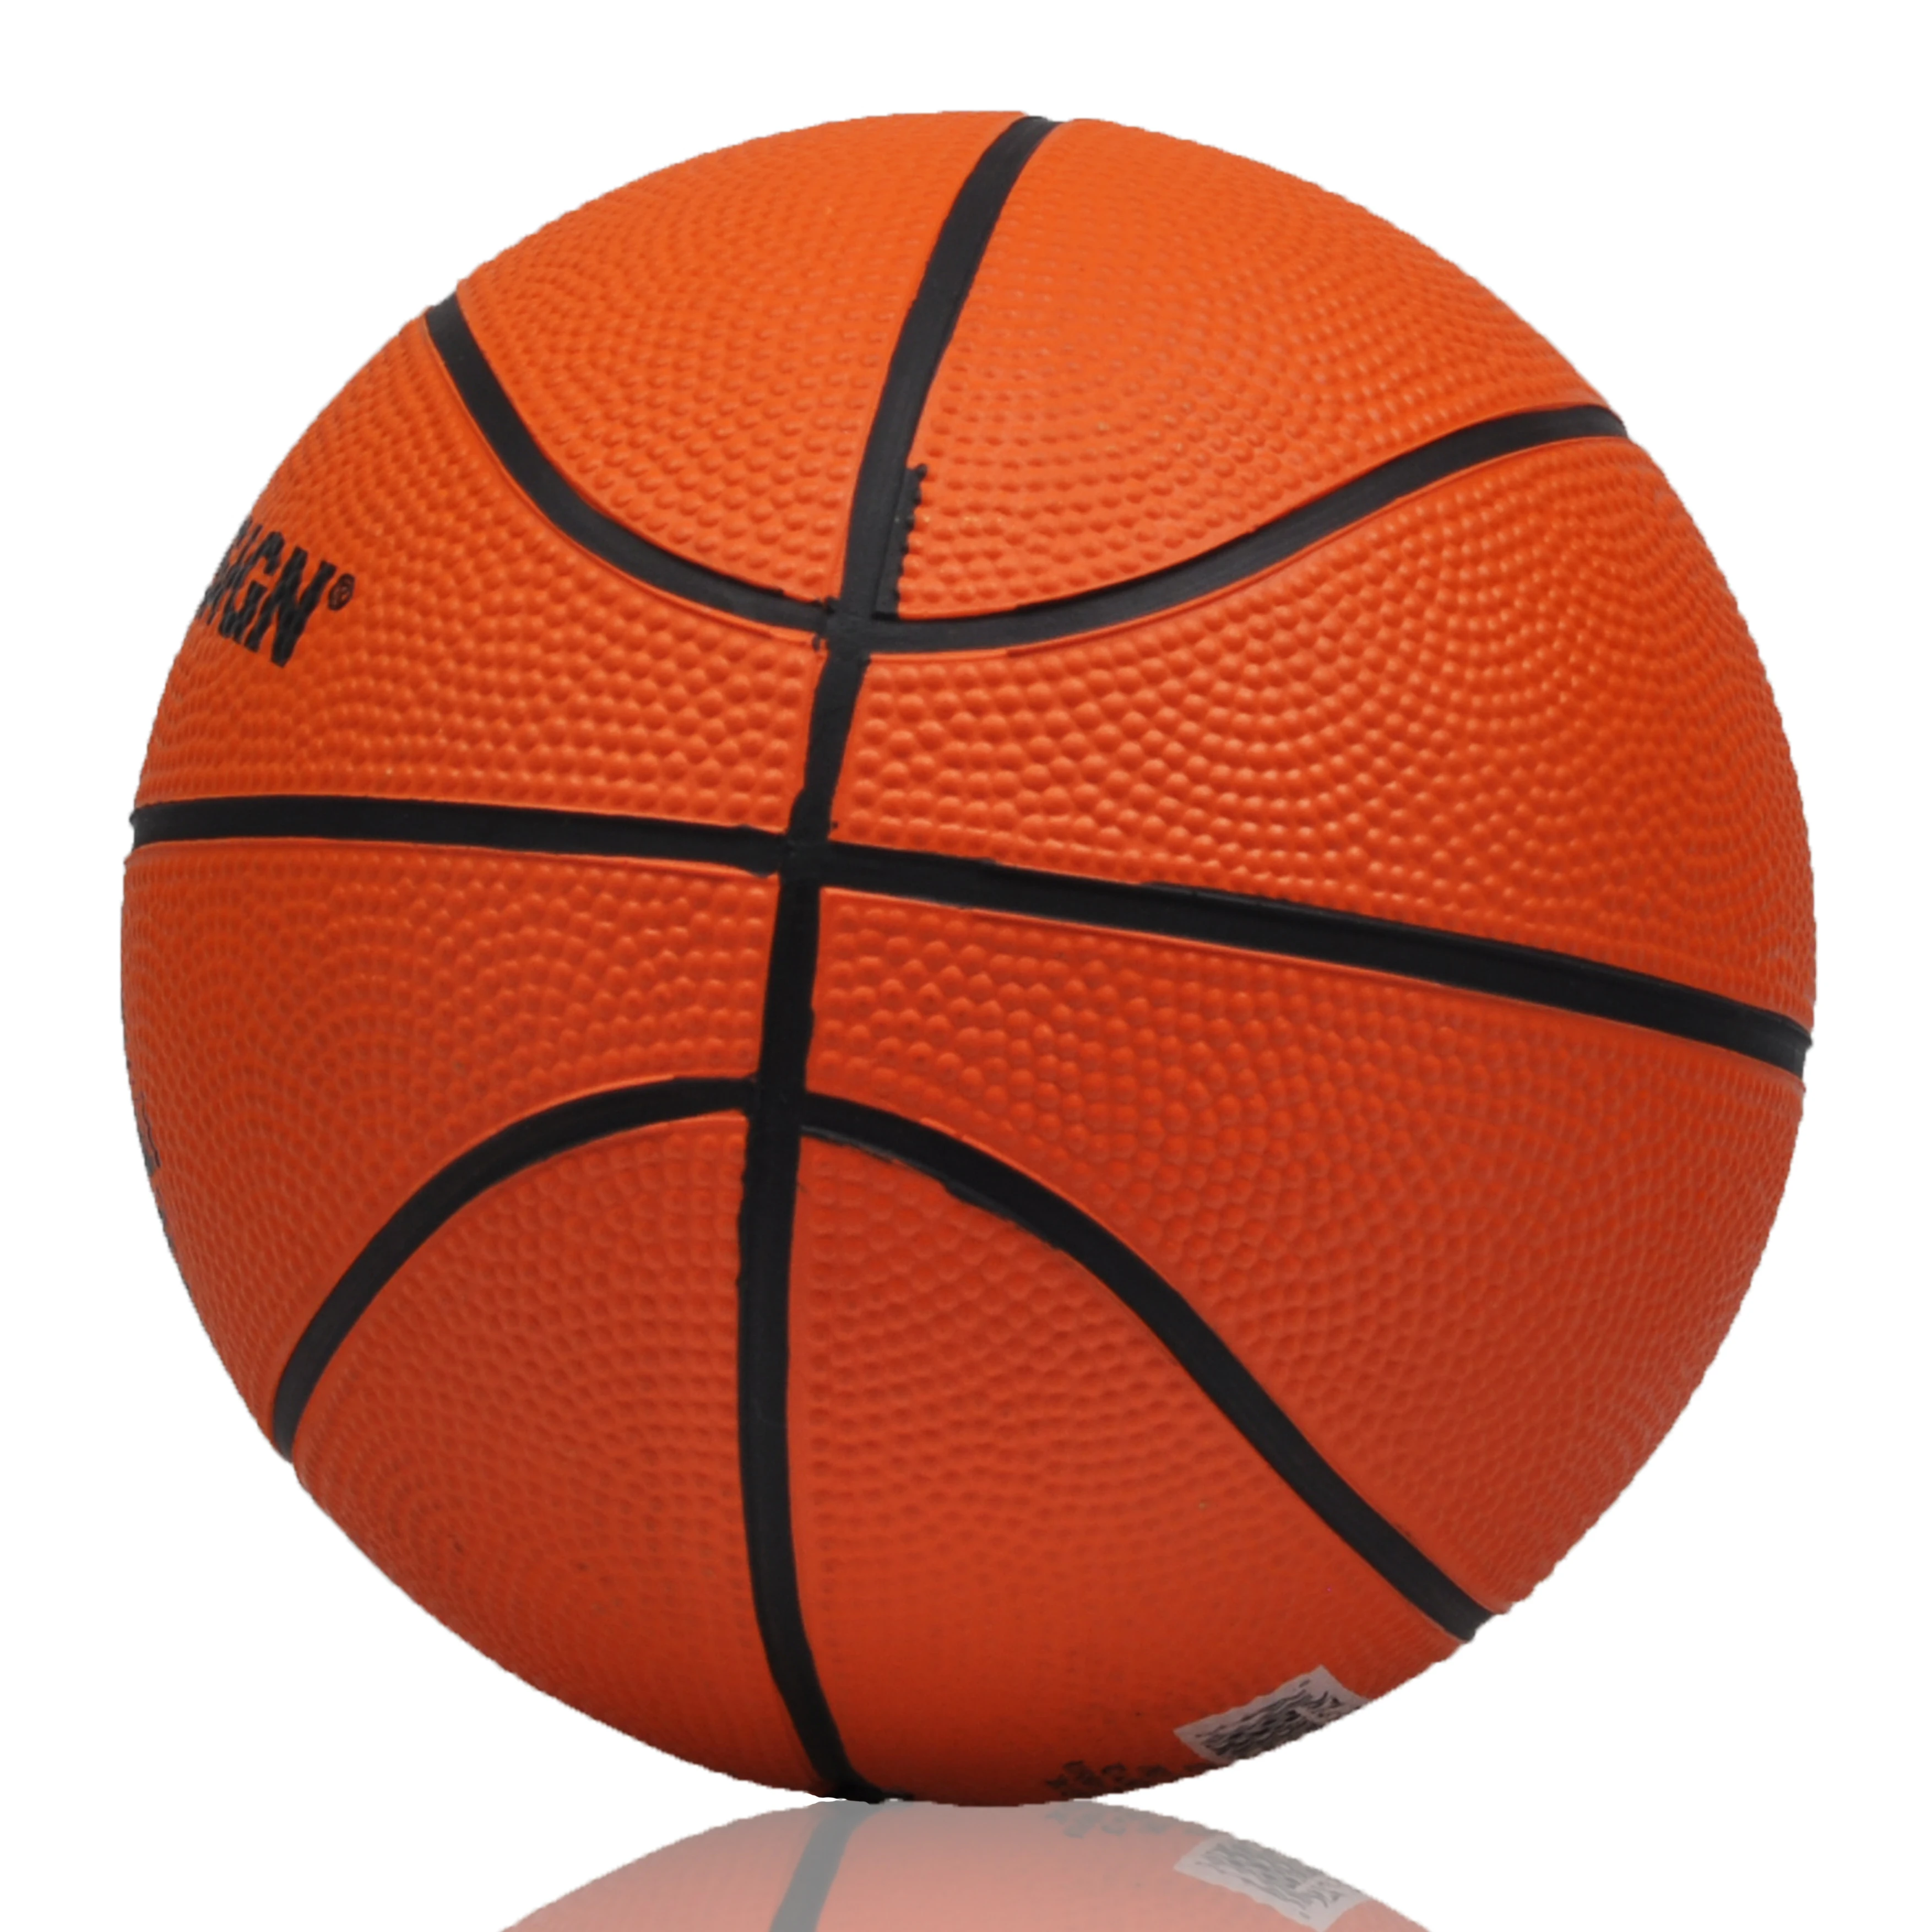 Size 5 High Quality Leather Basketball Ball - Buy Custom Logo And Color ...